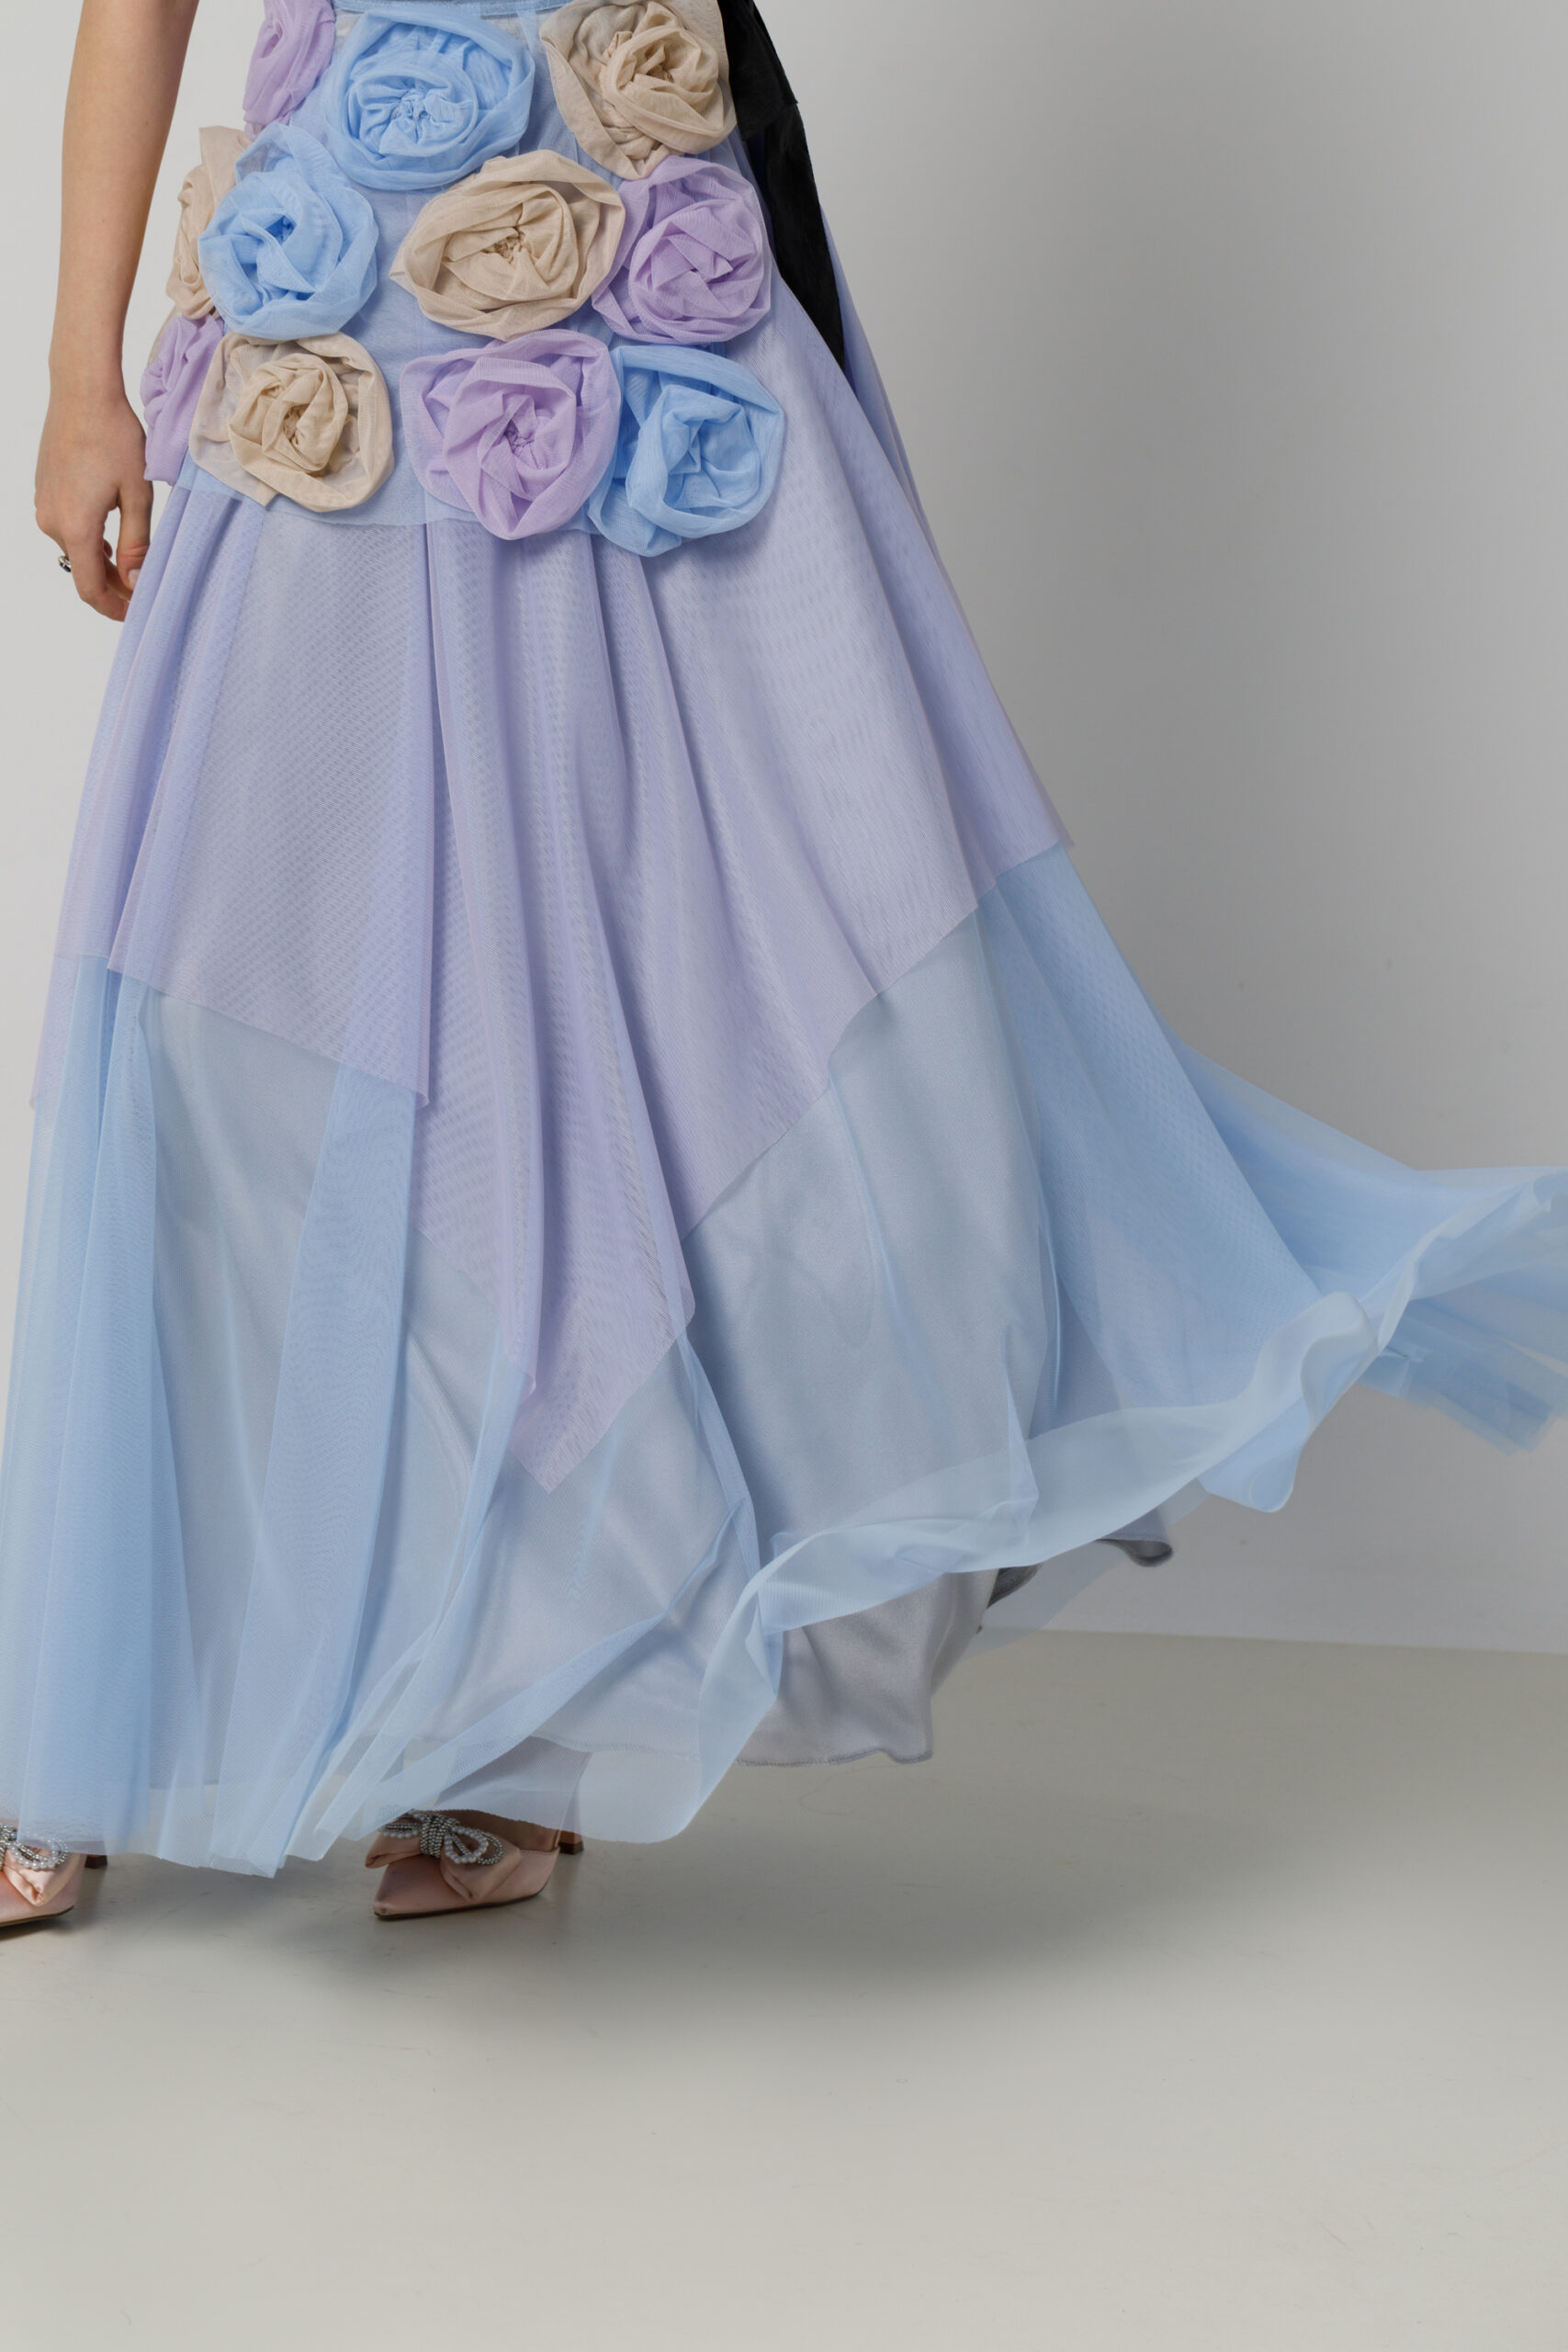 SIMRA elegant dress with volumetric tulle flowers. Natural fabrics, original design, handmade embroidery